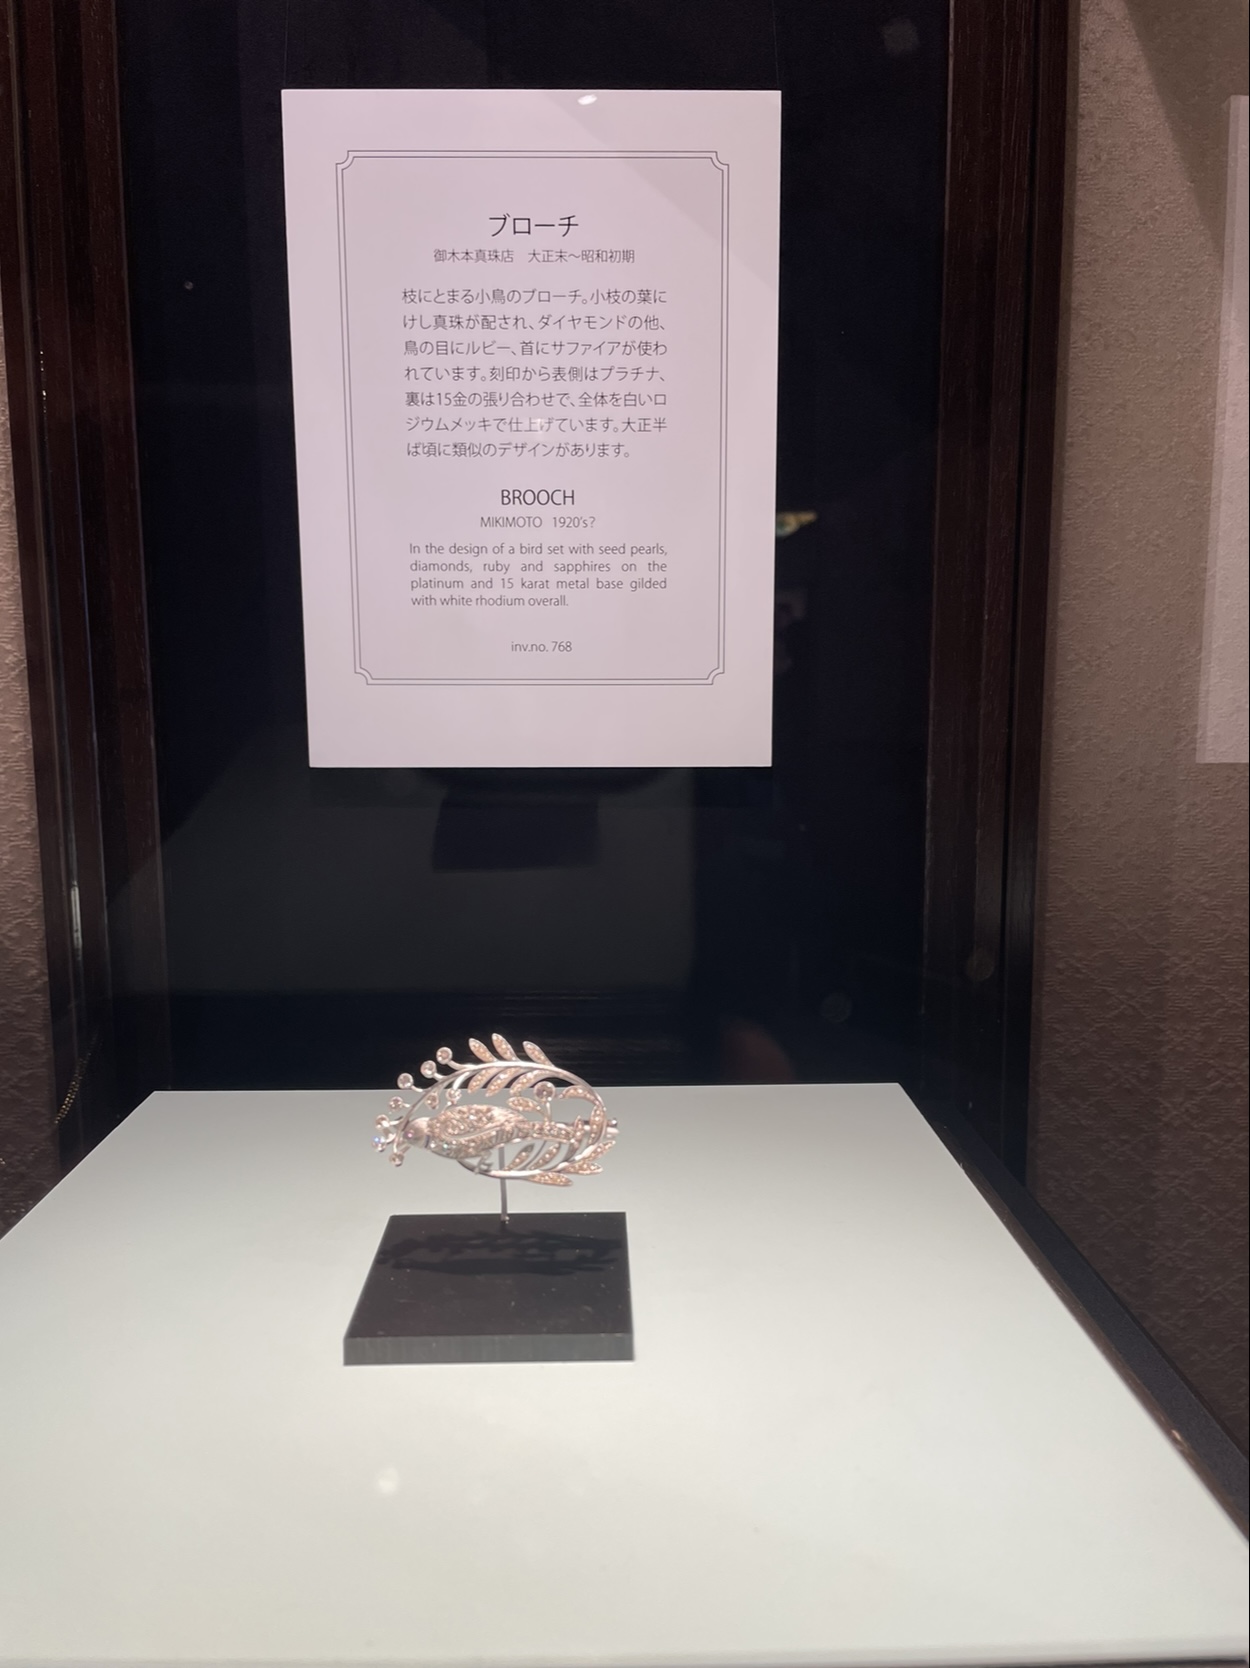 Mikimoto Pearl Brooch - Mikimoto Pearl Museum